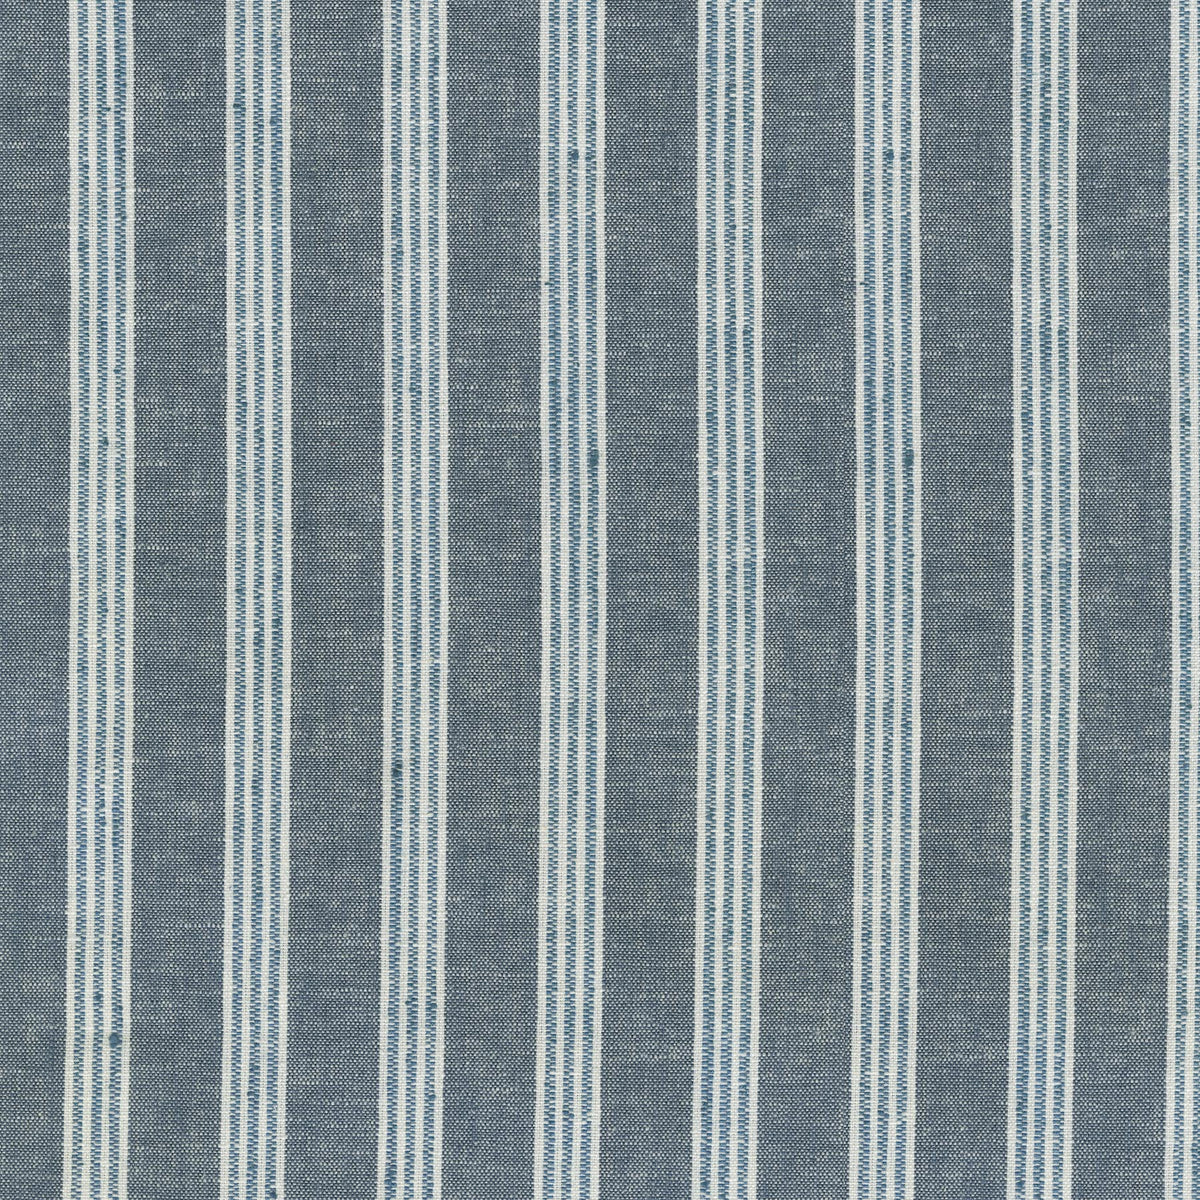 P/K Lifestyles Montaro Stripe - Indigo 411241 Fabric Swatch